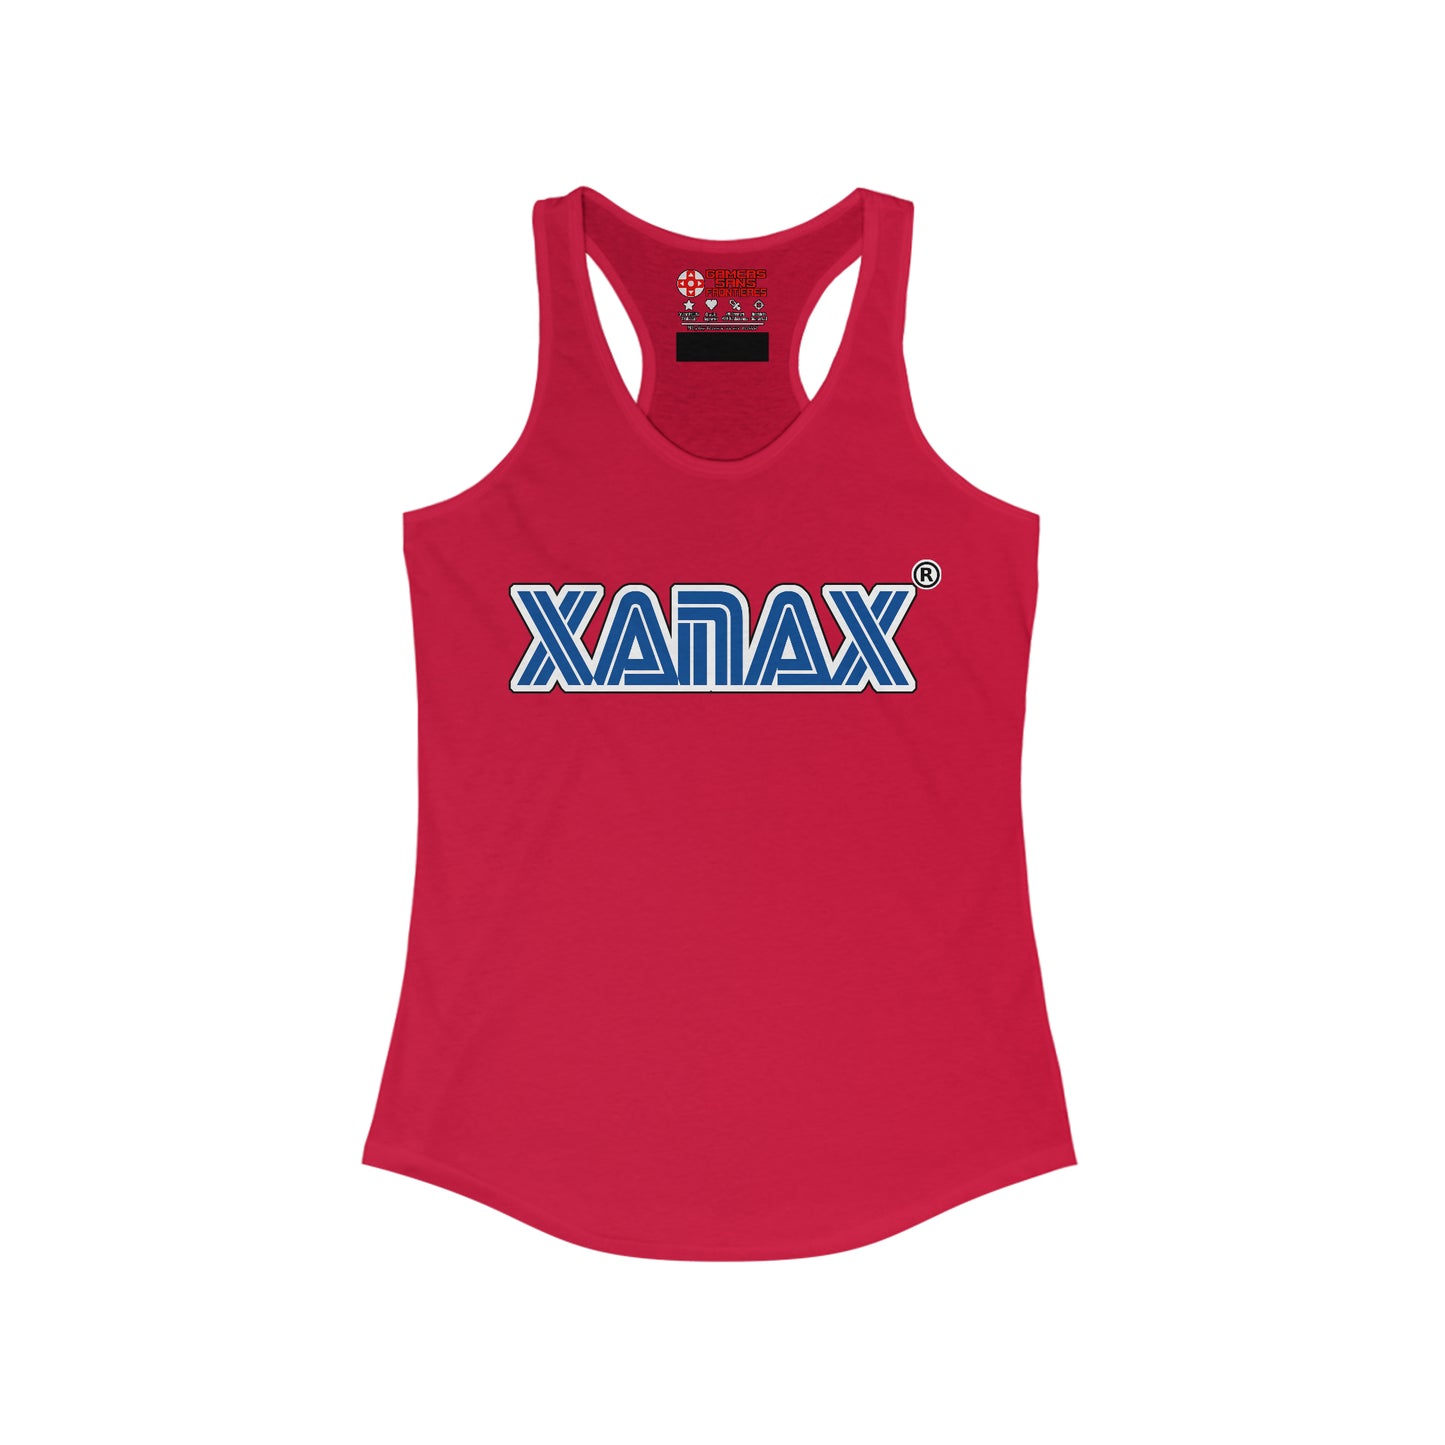 Women's Racerback Tank - XANAX